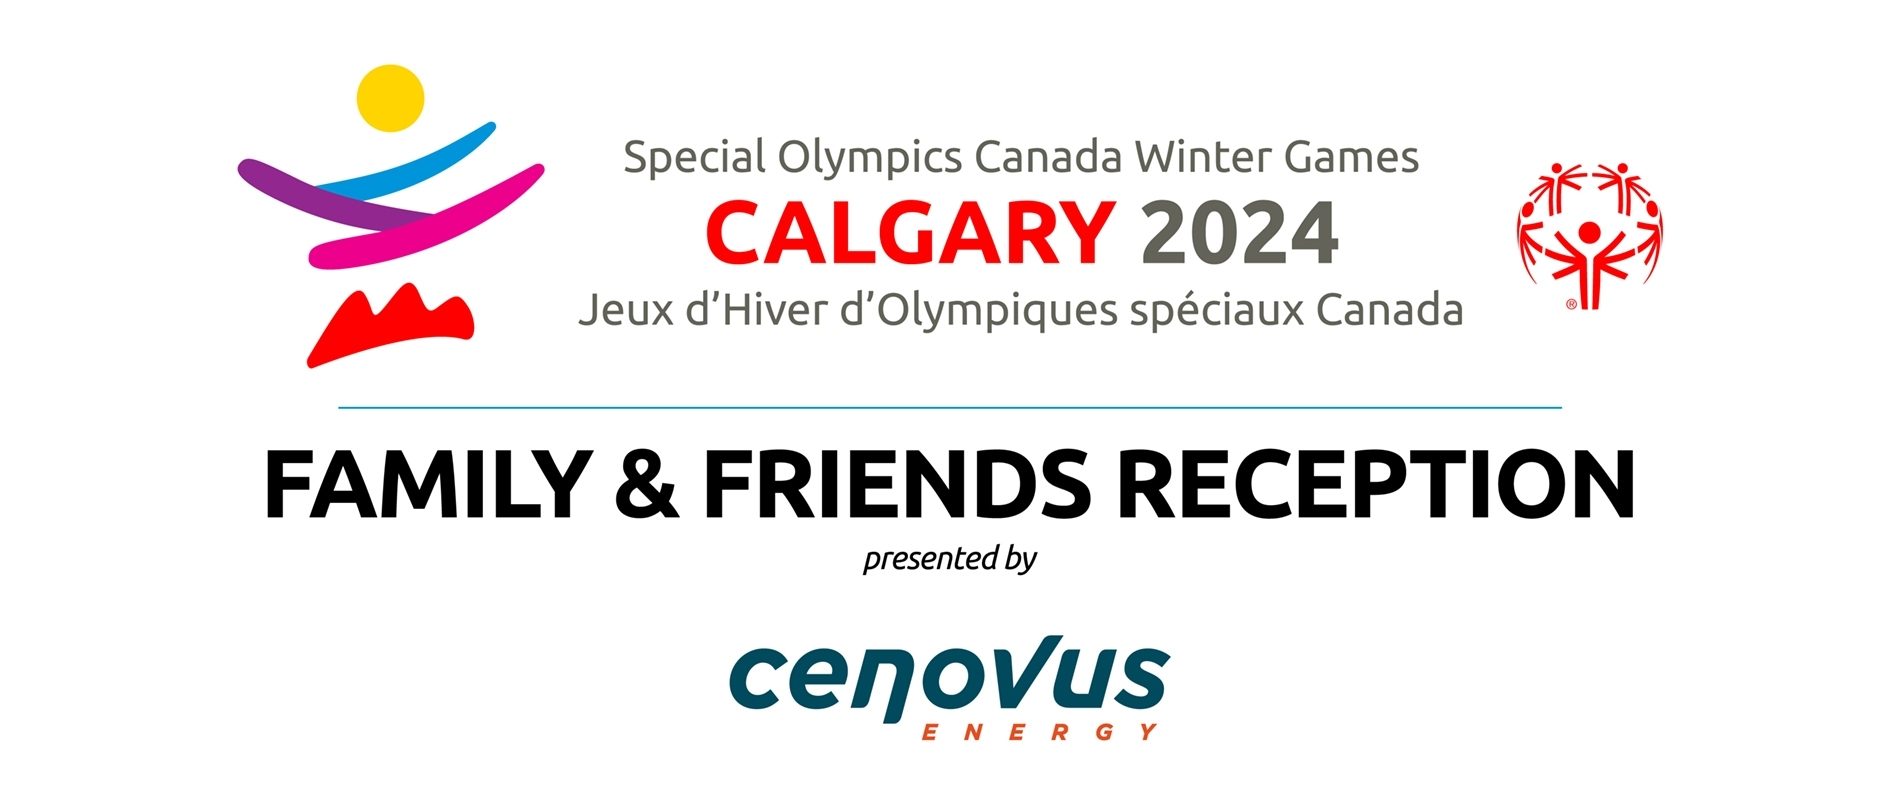 Special Olympics Canada Winter Games Calgary 2024 Studio Bell